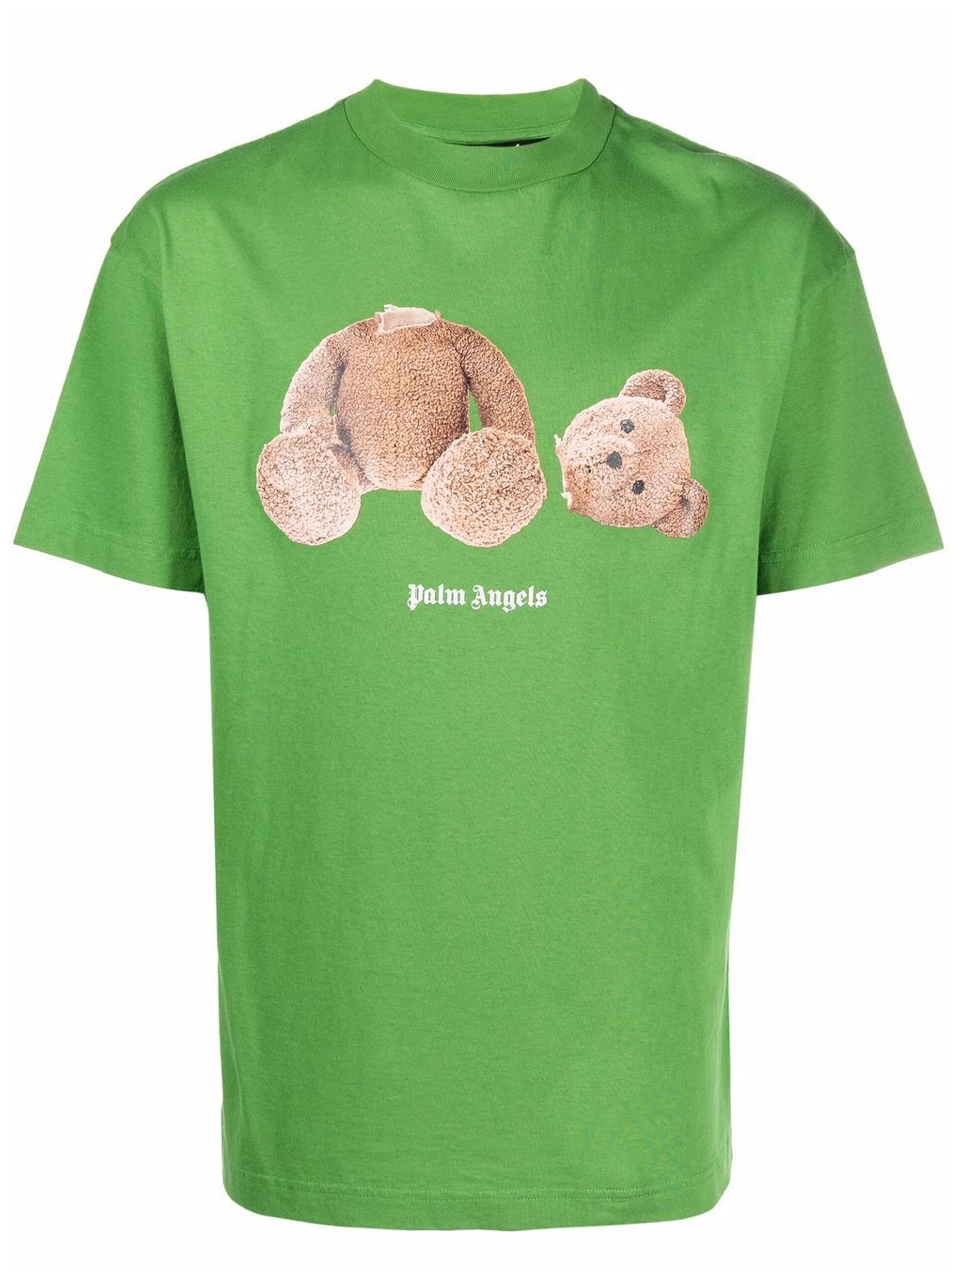 https://suagrife.com/wp-content/uploads/2022/01/camiseta-palm-angels-verde-estampa-urso-1.jpg